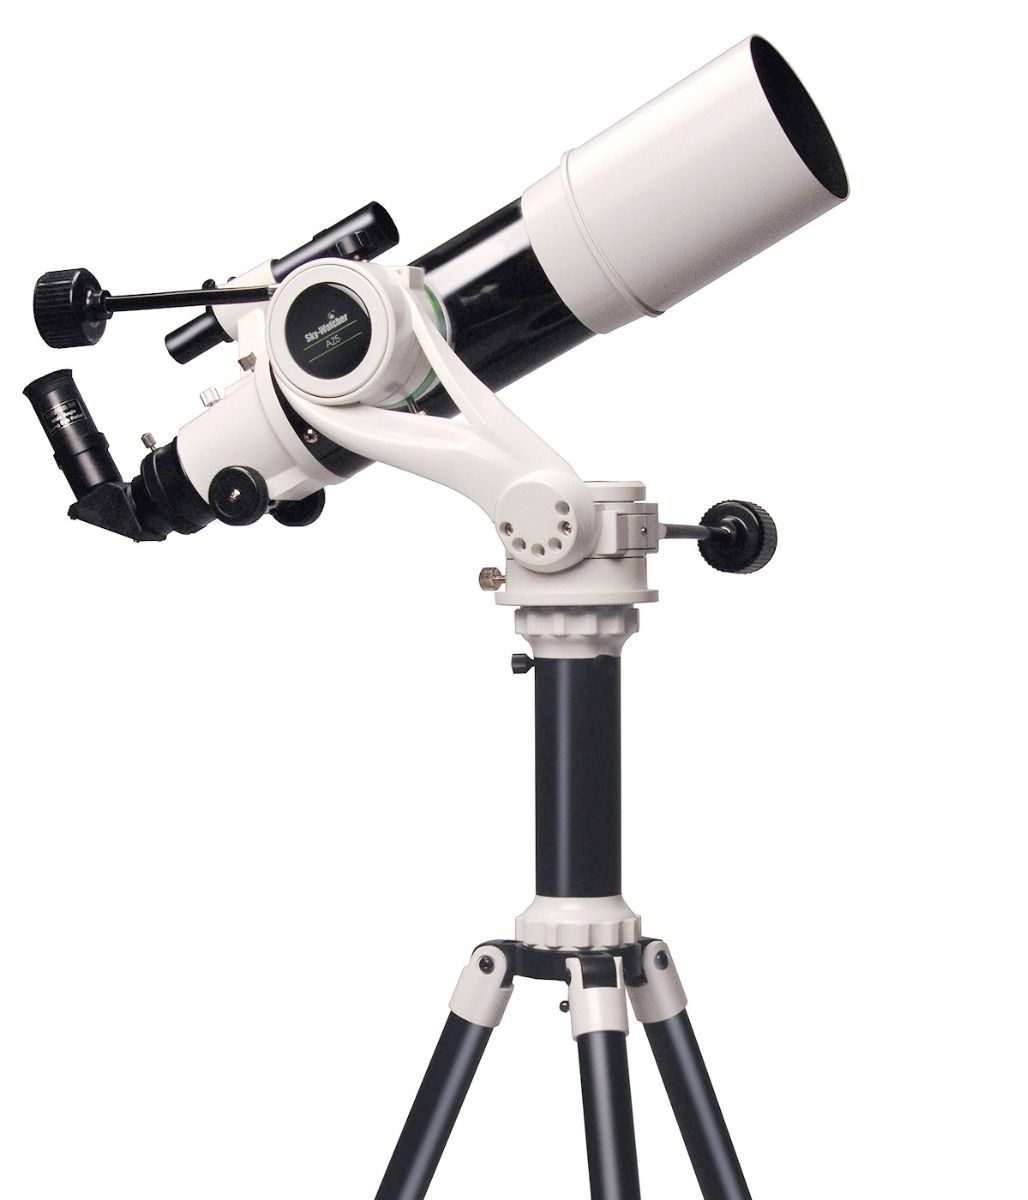 Sky-watcher 102mm (4") f4.9 deluxe Alt - Azimuth Reflector telescope (10261)